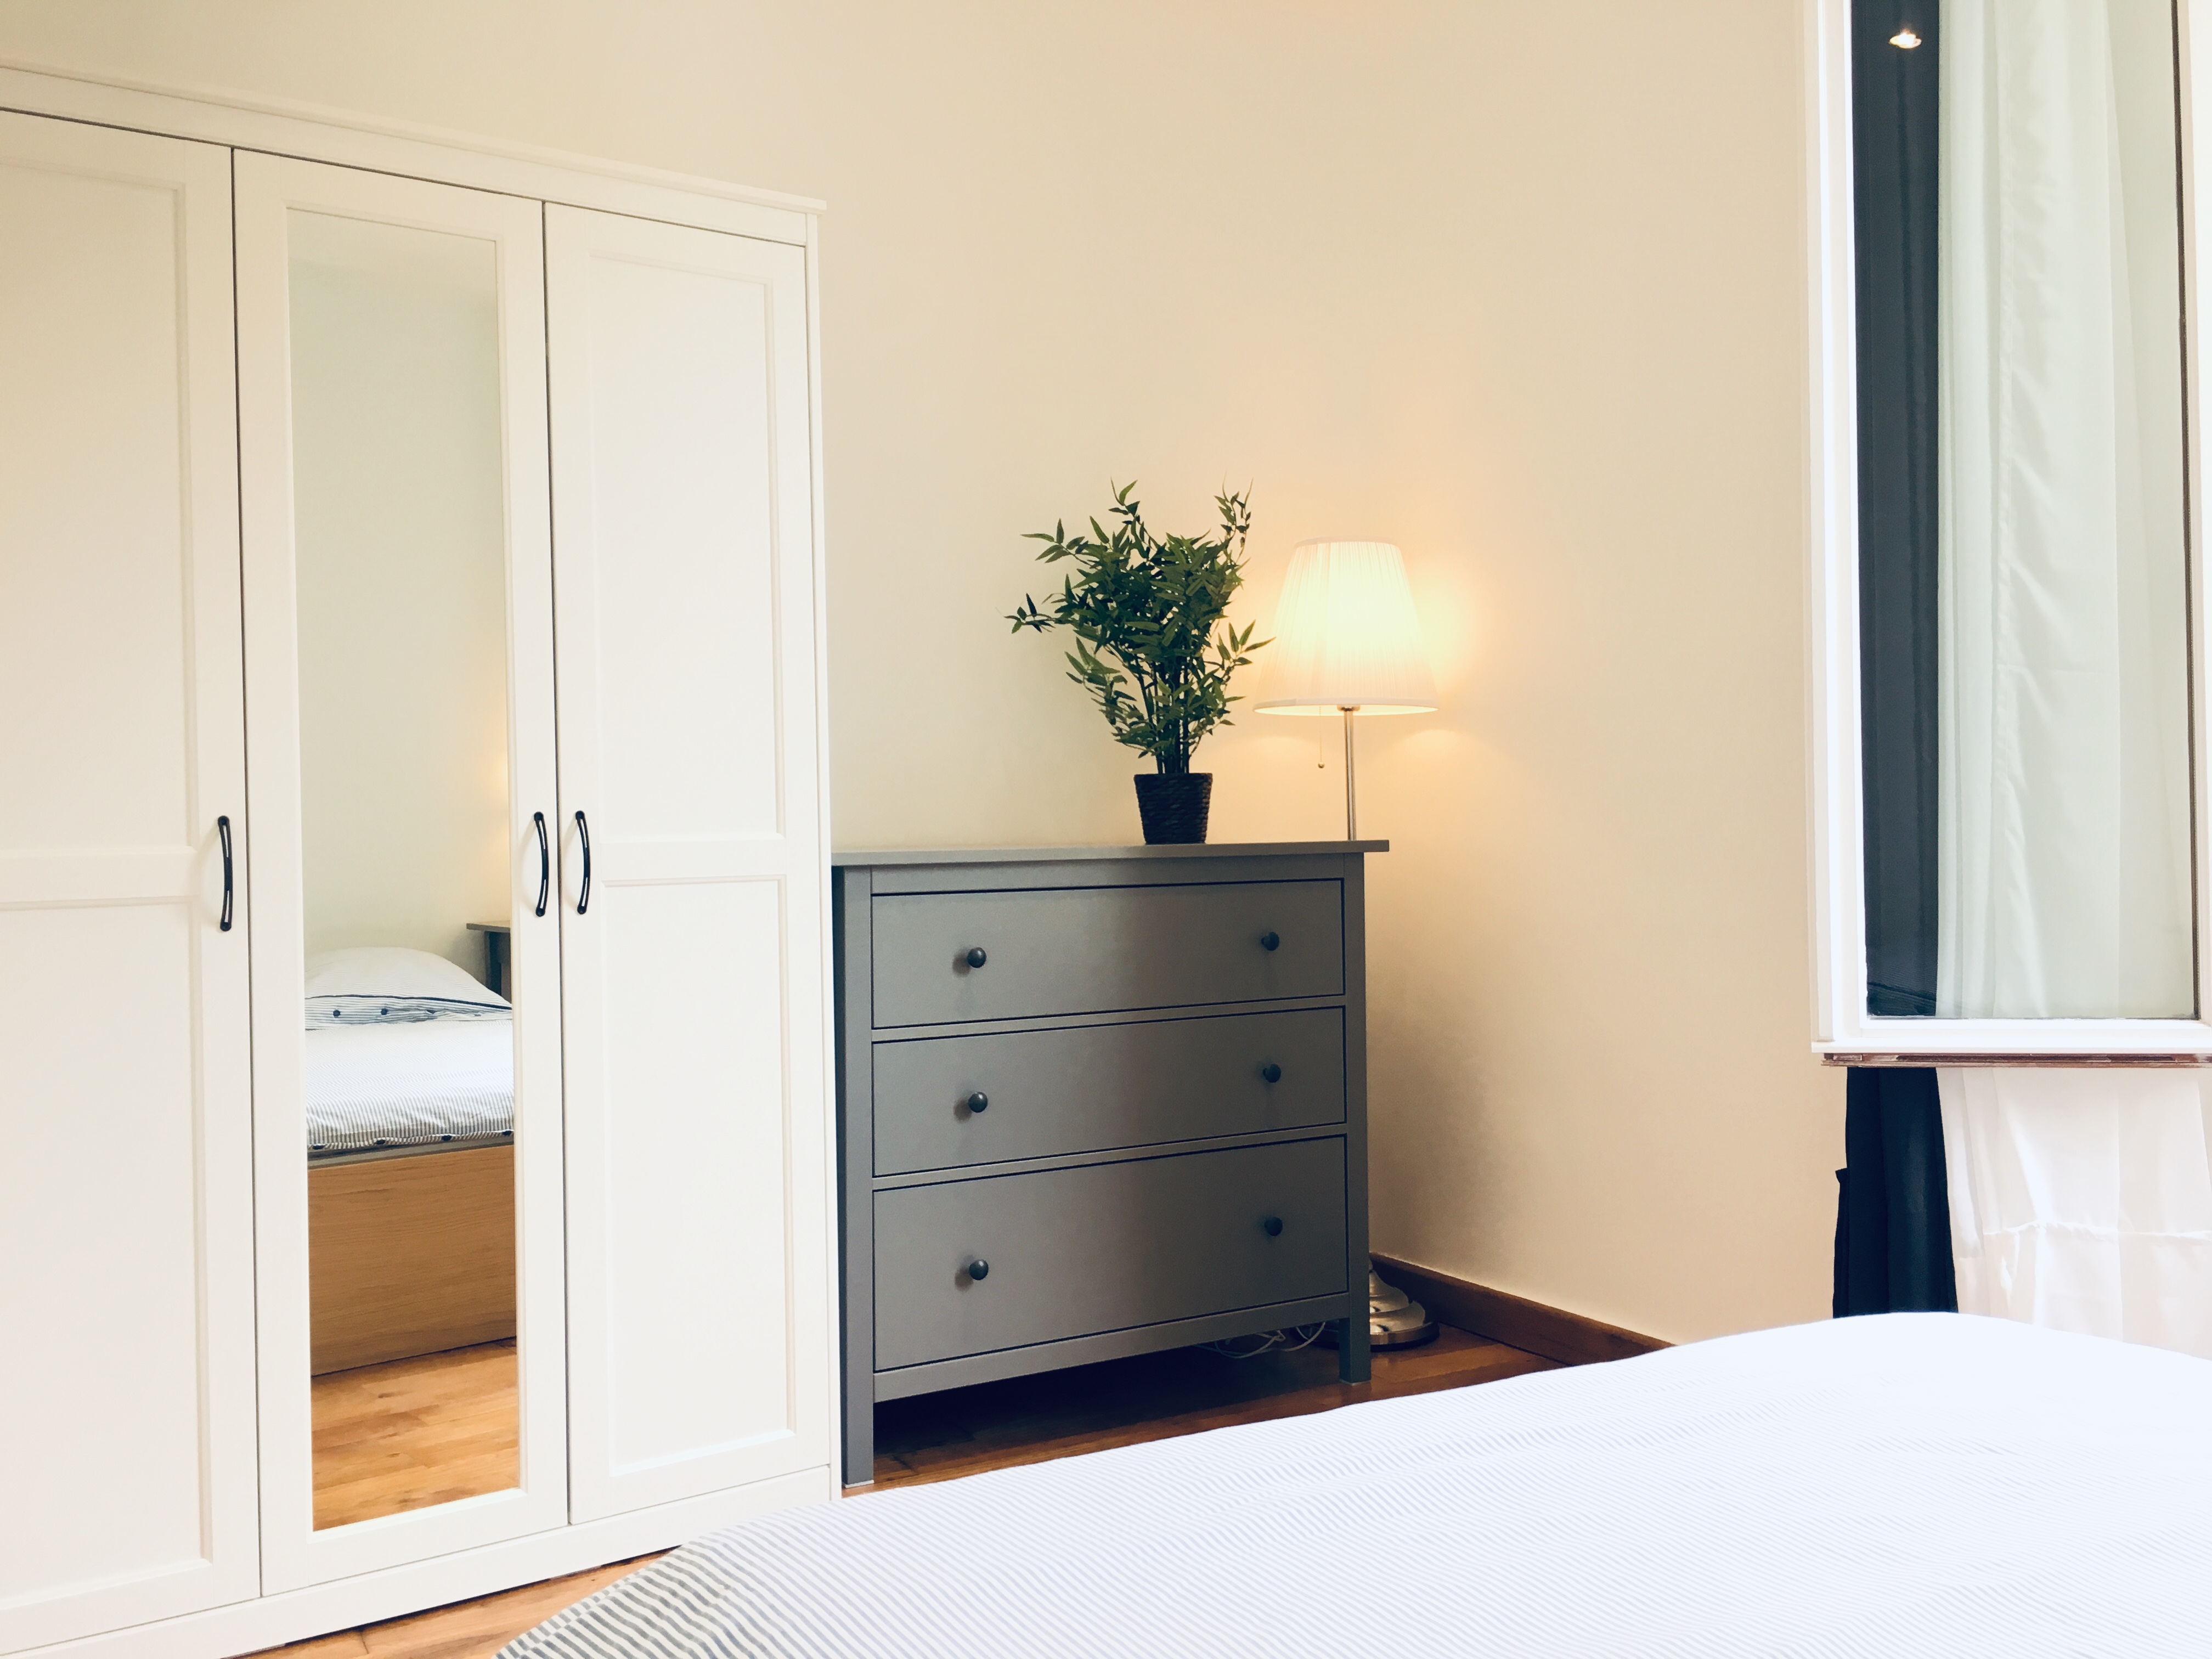 Insead housing premium flat for rent Fontainebleau apartment